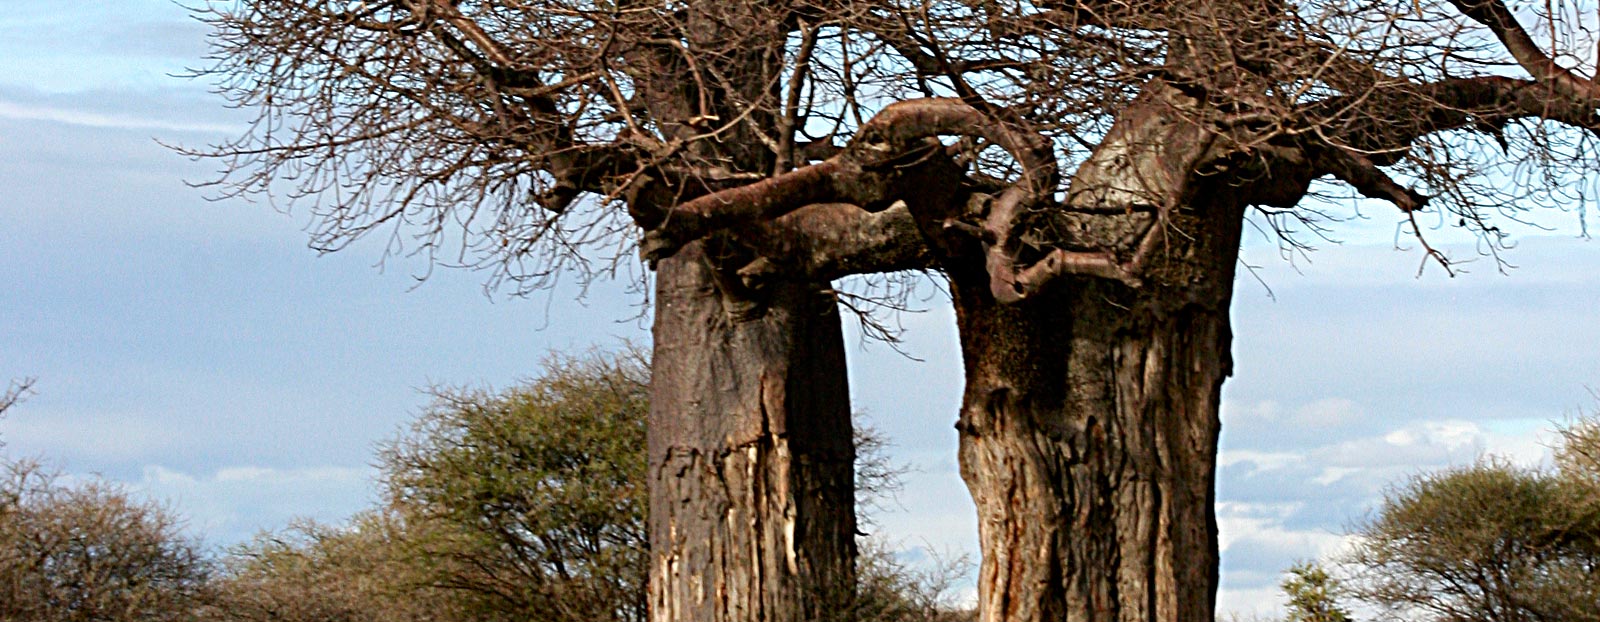 Baobab in its natural habitat